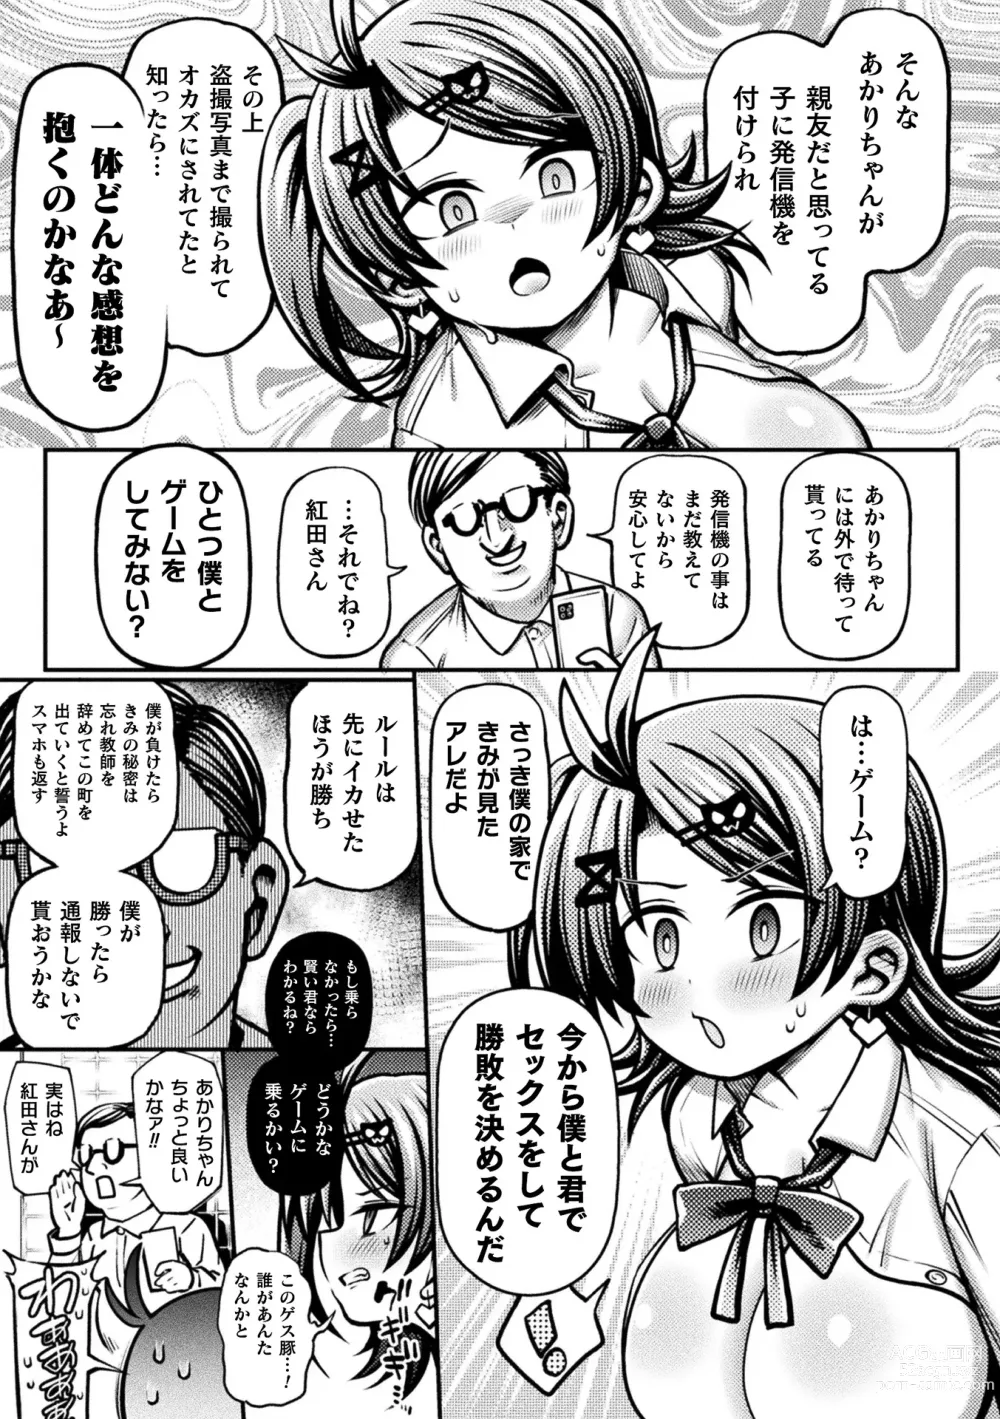 Page 23 of manga Mesugaki Wakara se Game! Episode 2